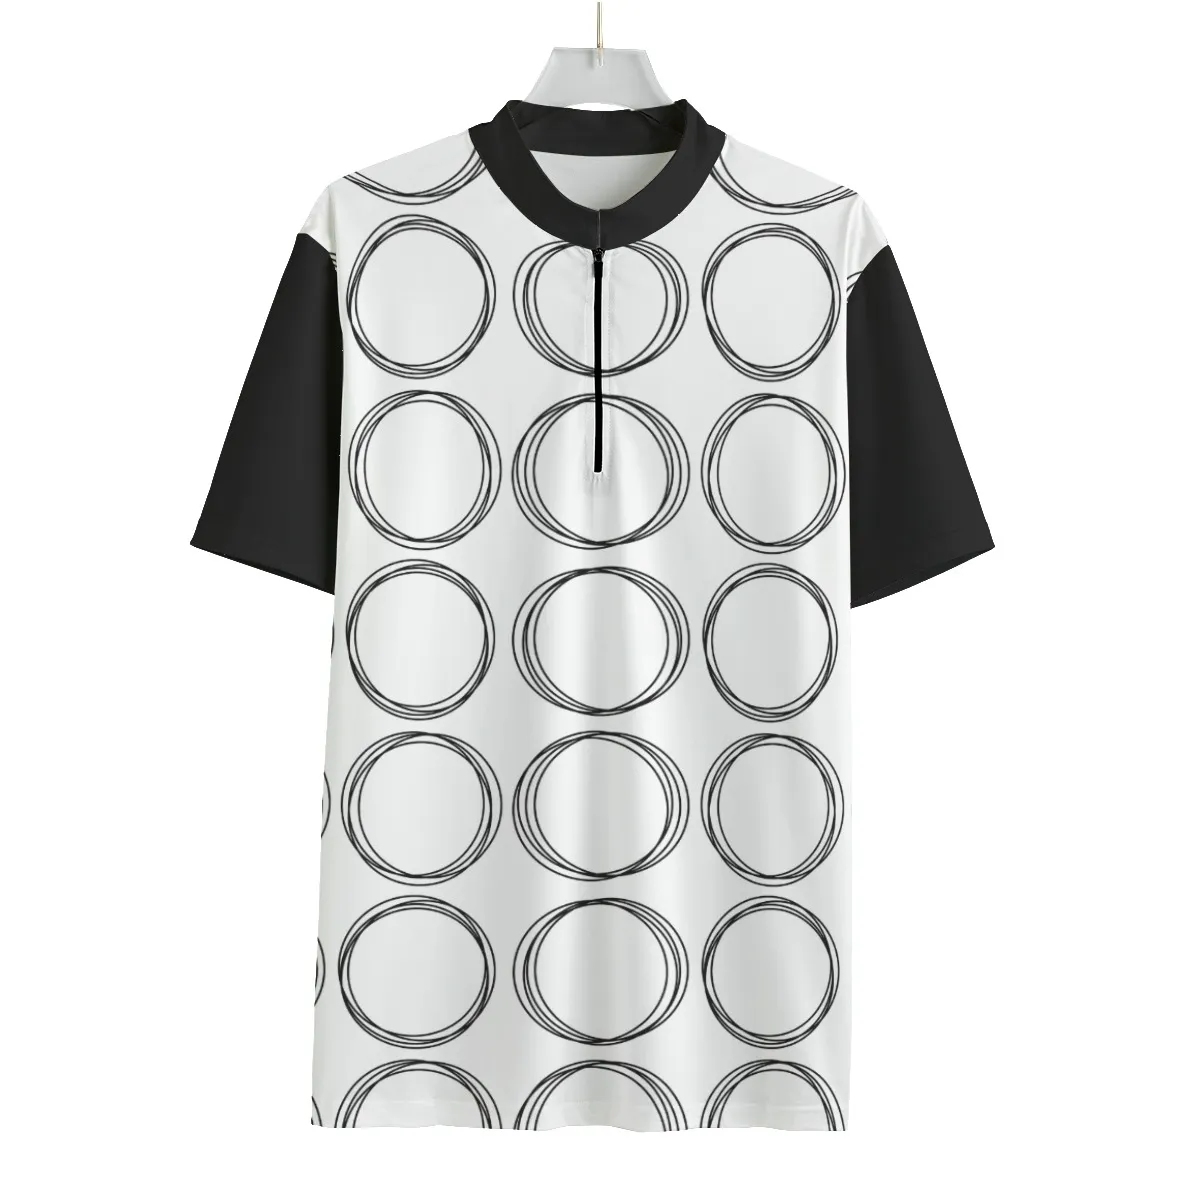 Men’s Billiard Circles Shirt With Black Zipper